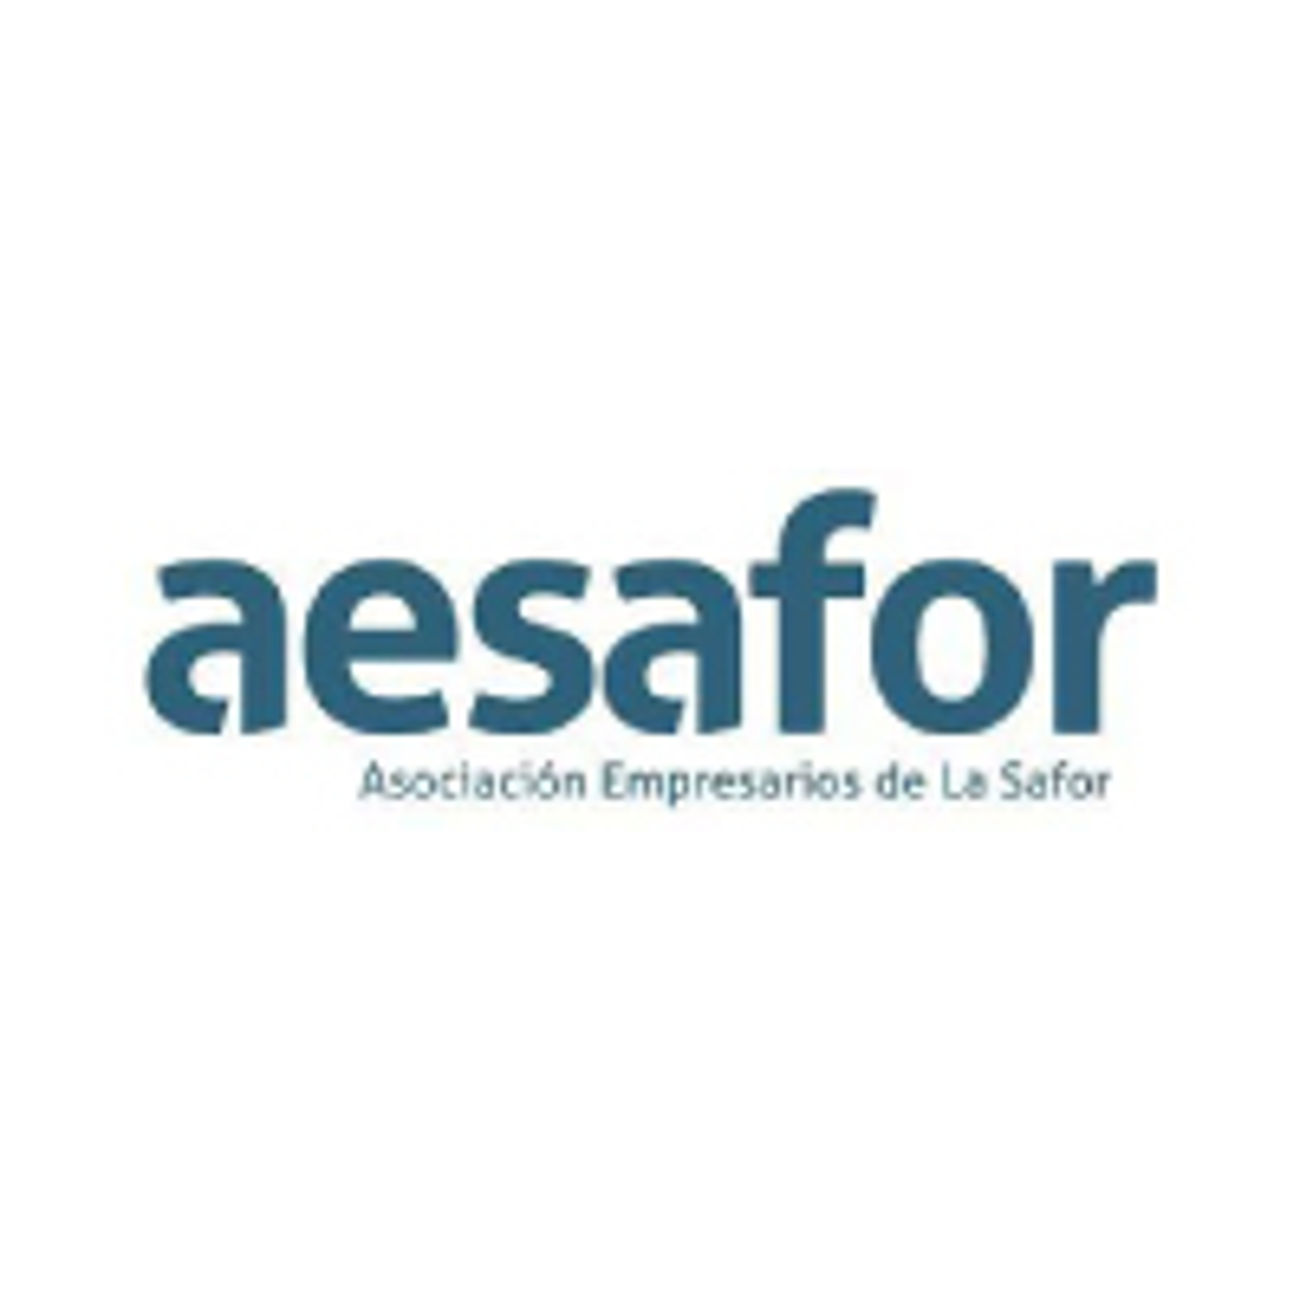 AESAFOR Asociación Empresarios de la Safor